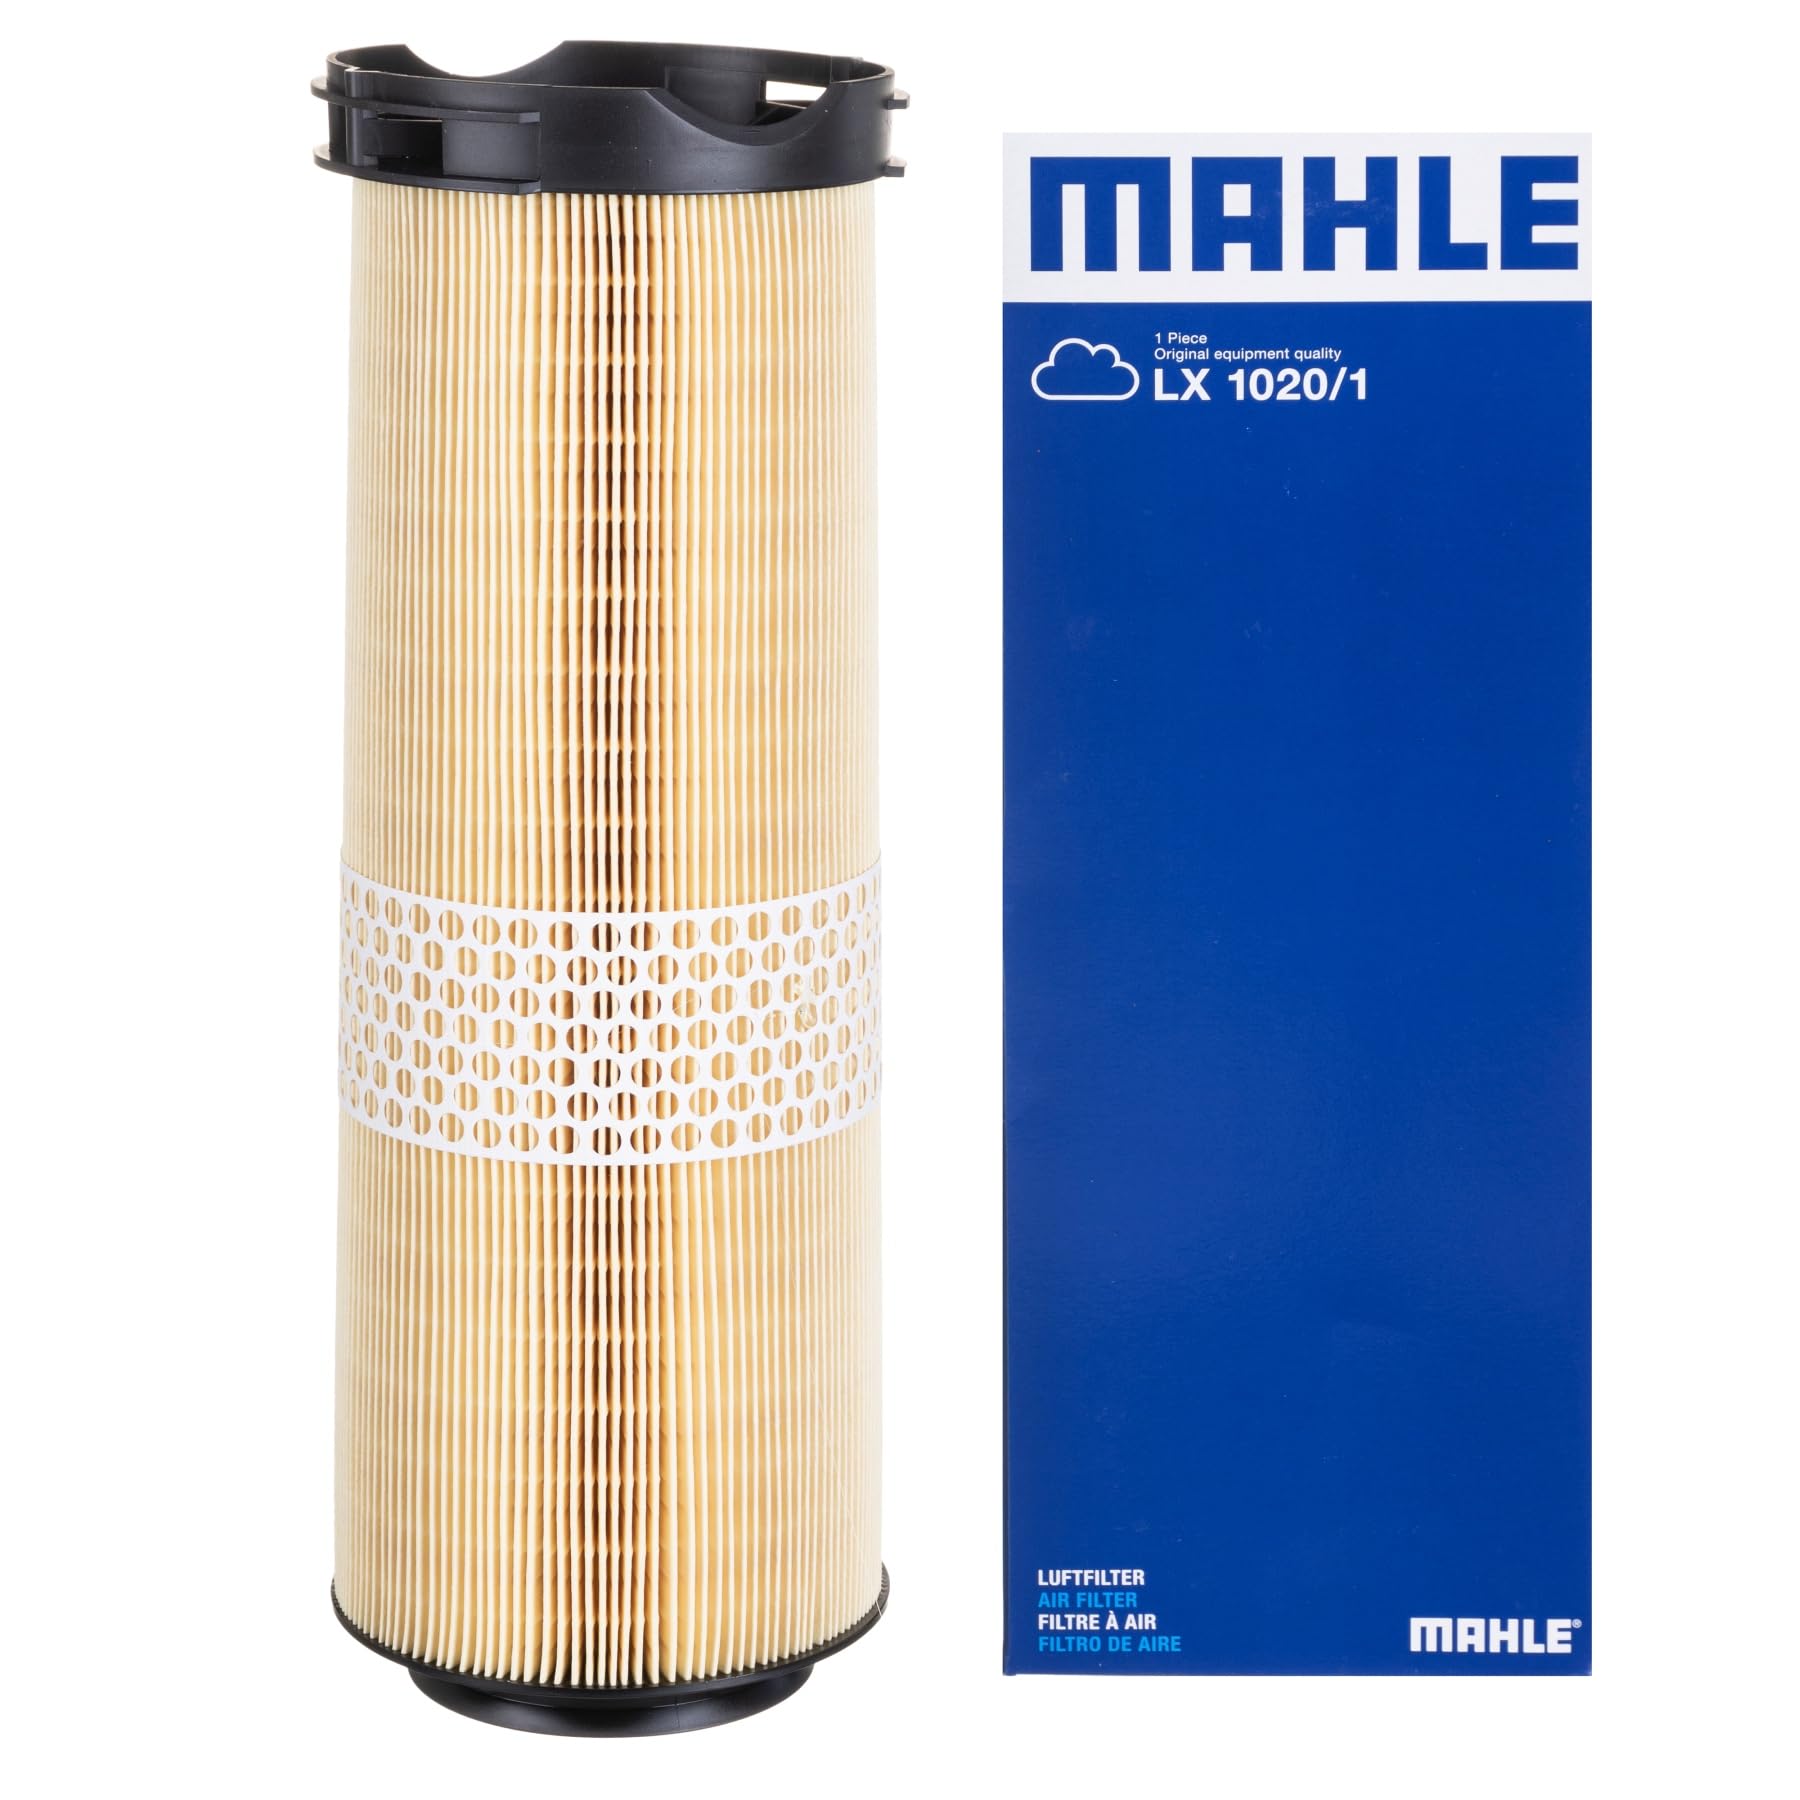 Mahle Knecht LX 1020/1 Luftfilter von MAHLE